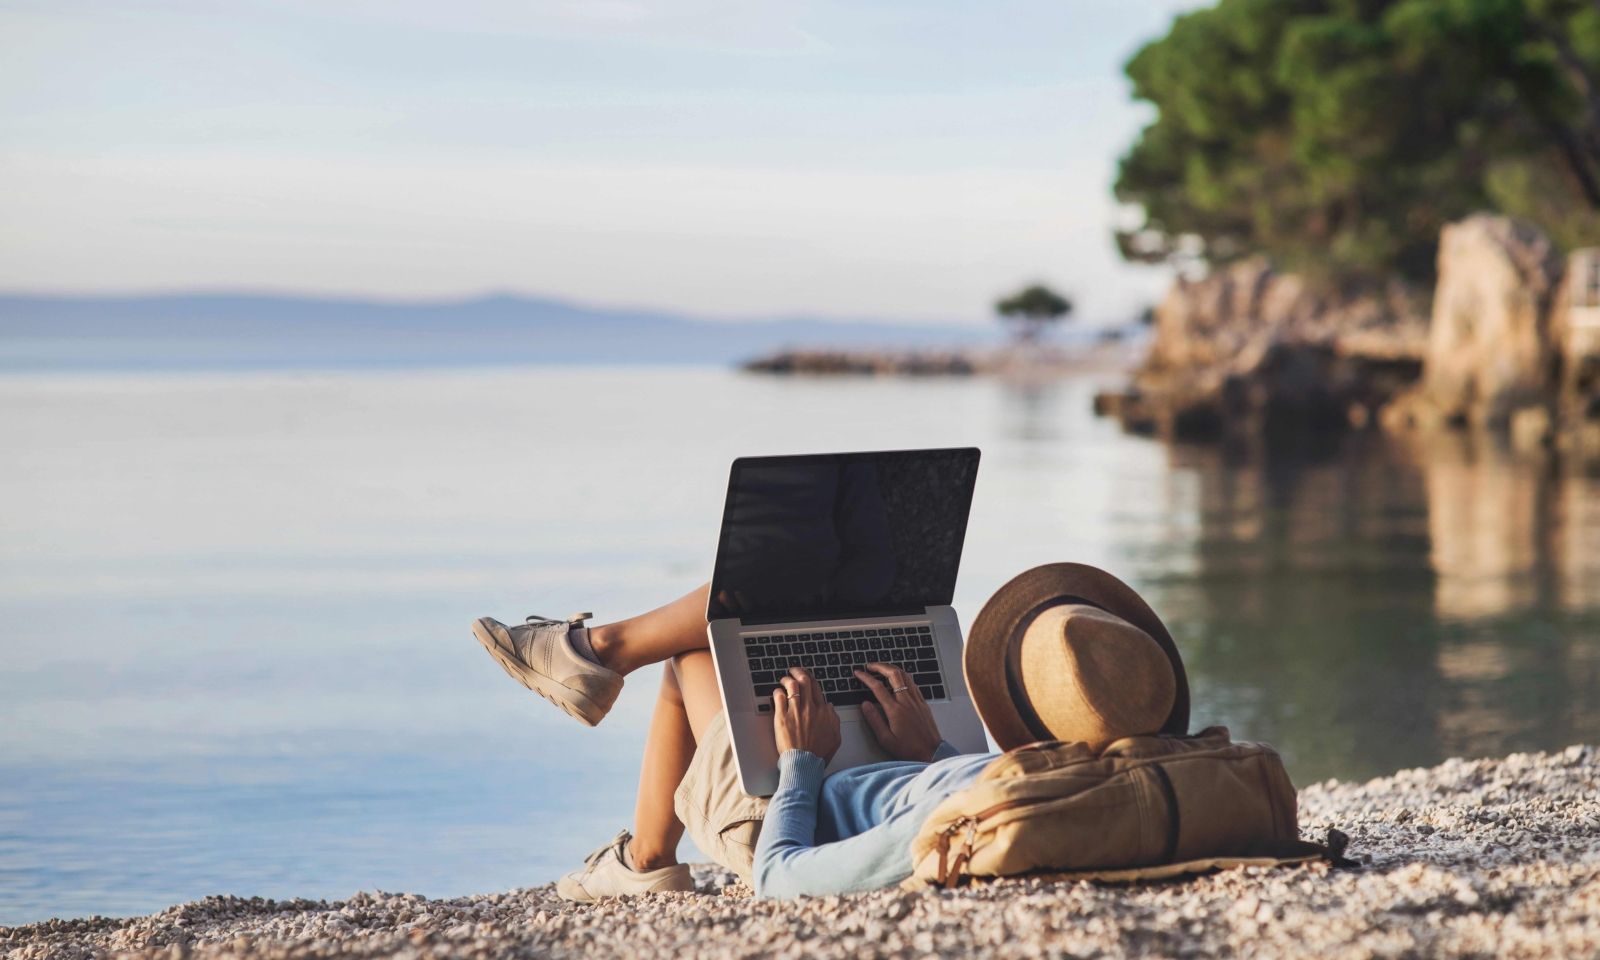 remote employee, man working on beach, man using laptop on beach